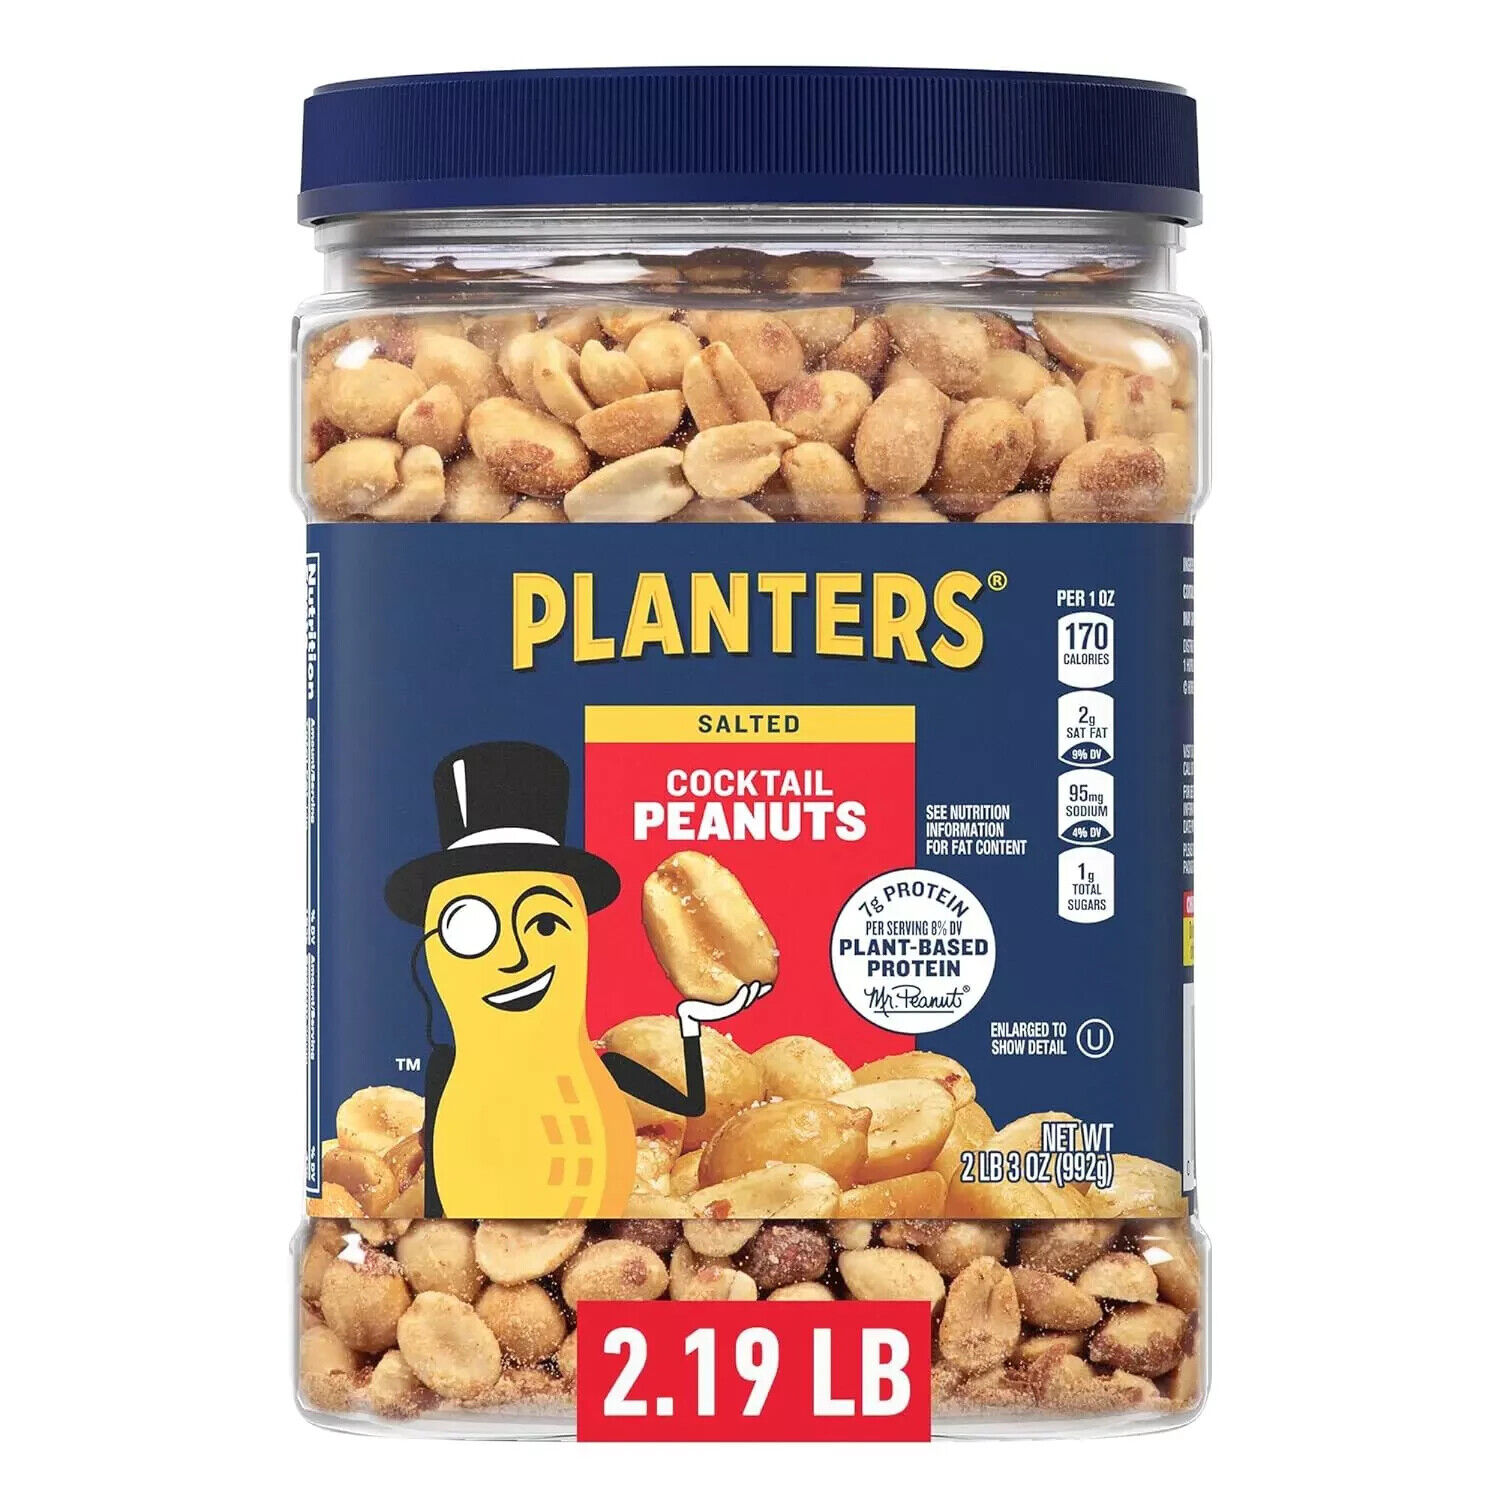 PLANTERS Salted Cocktail Peanuts - 2.19 lb Jar.